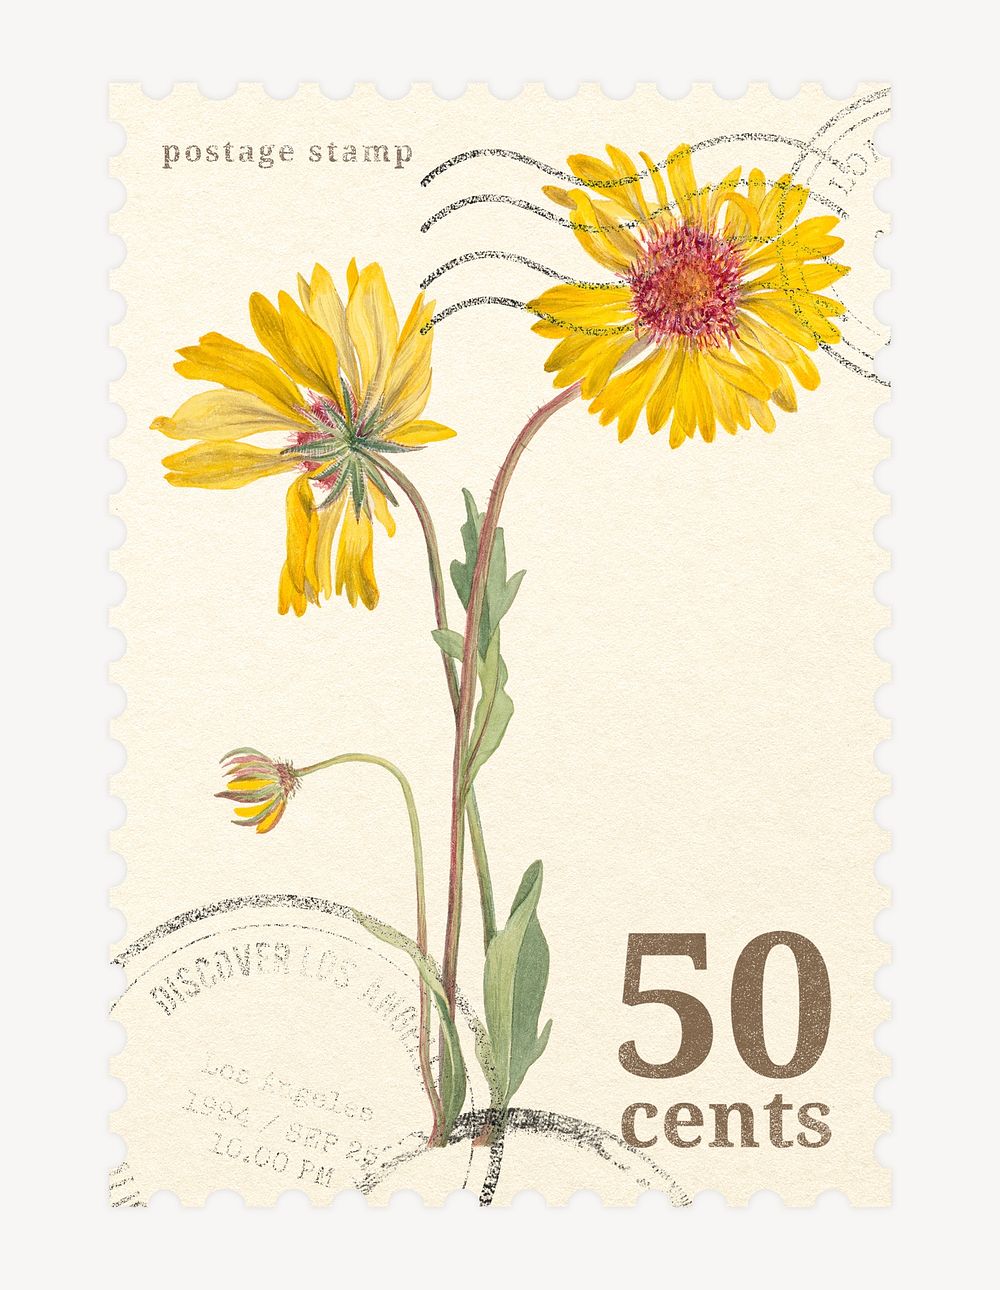 Aesthetic blanket flower postage stamp illustration